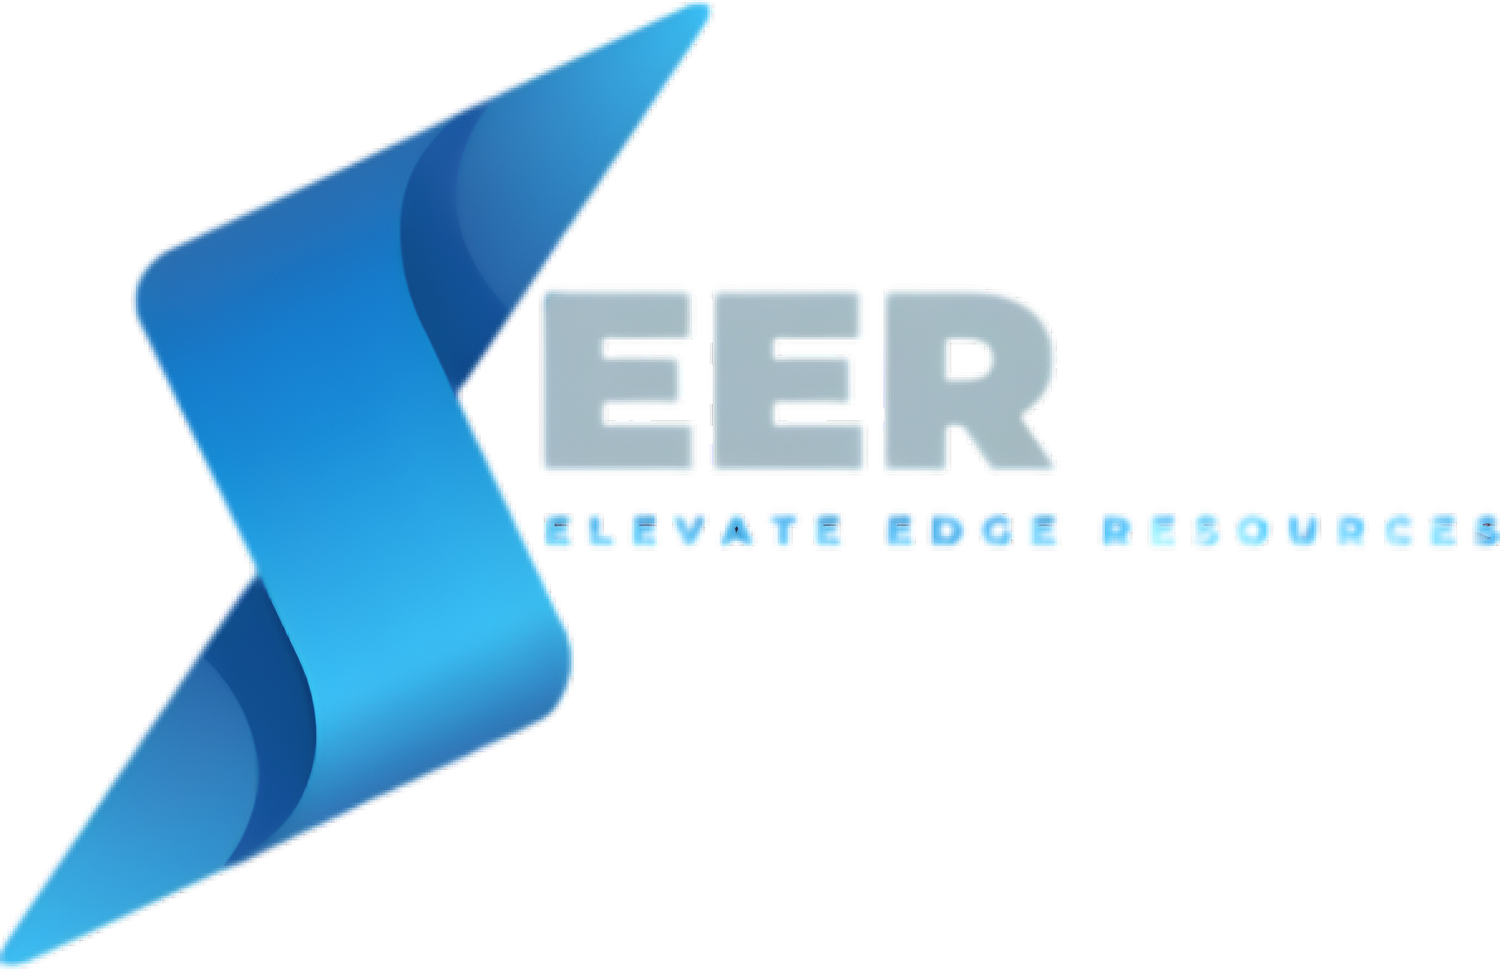 Elevate Edge Resources